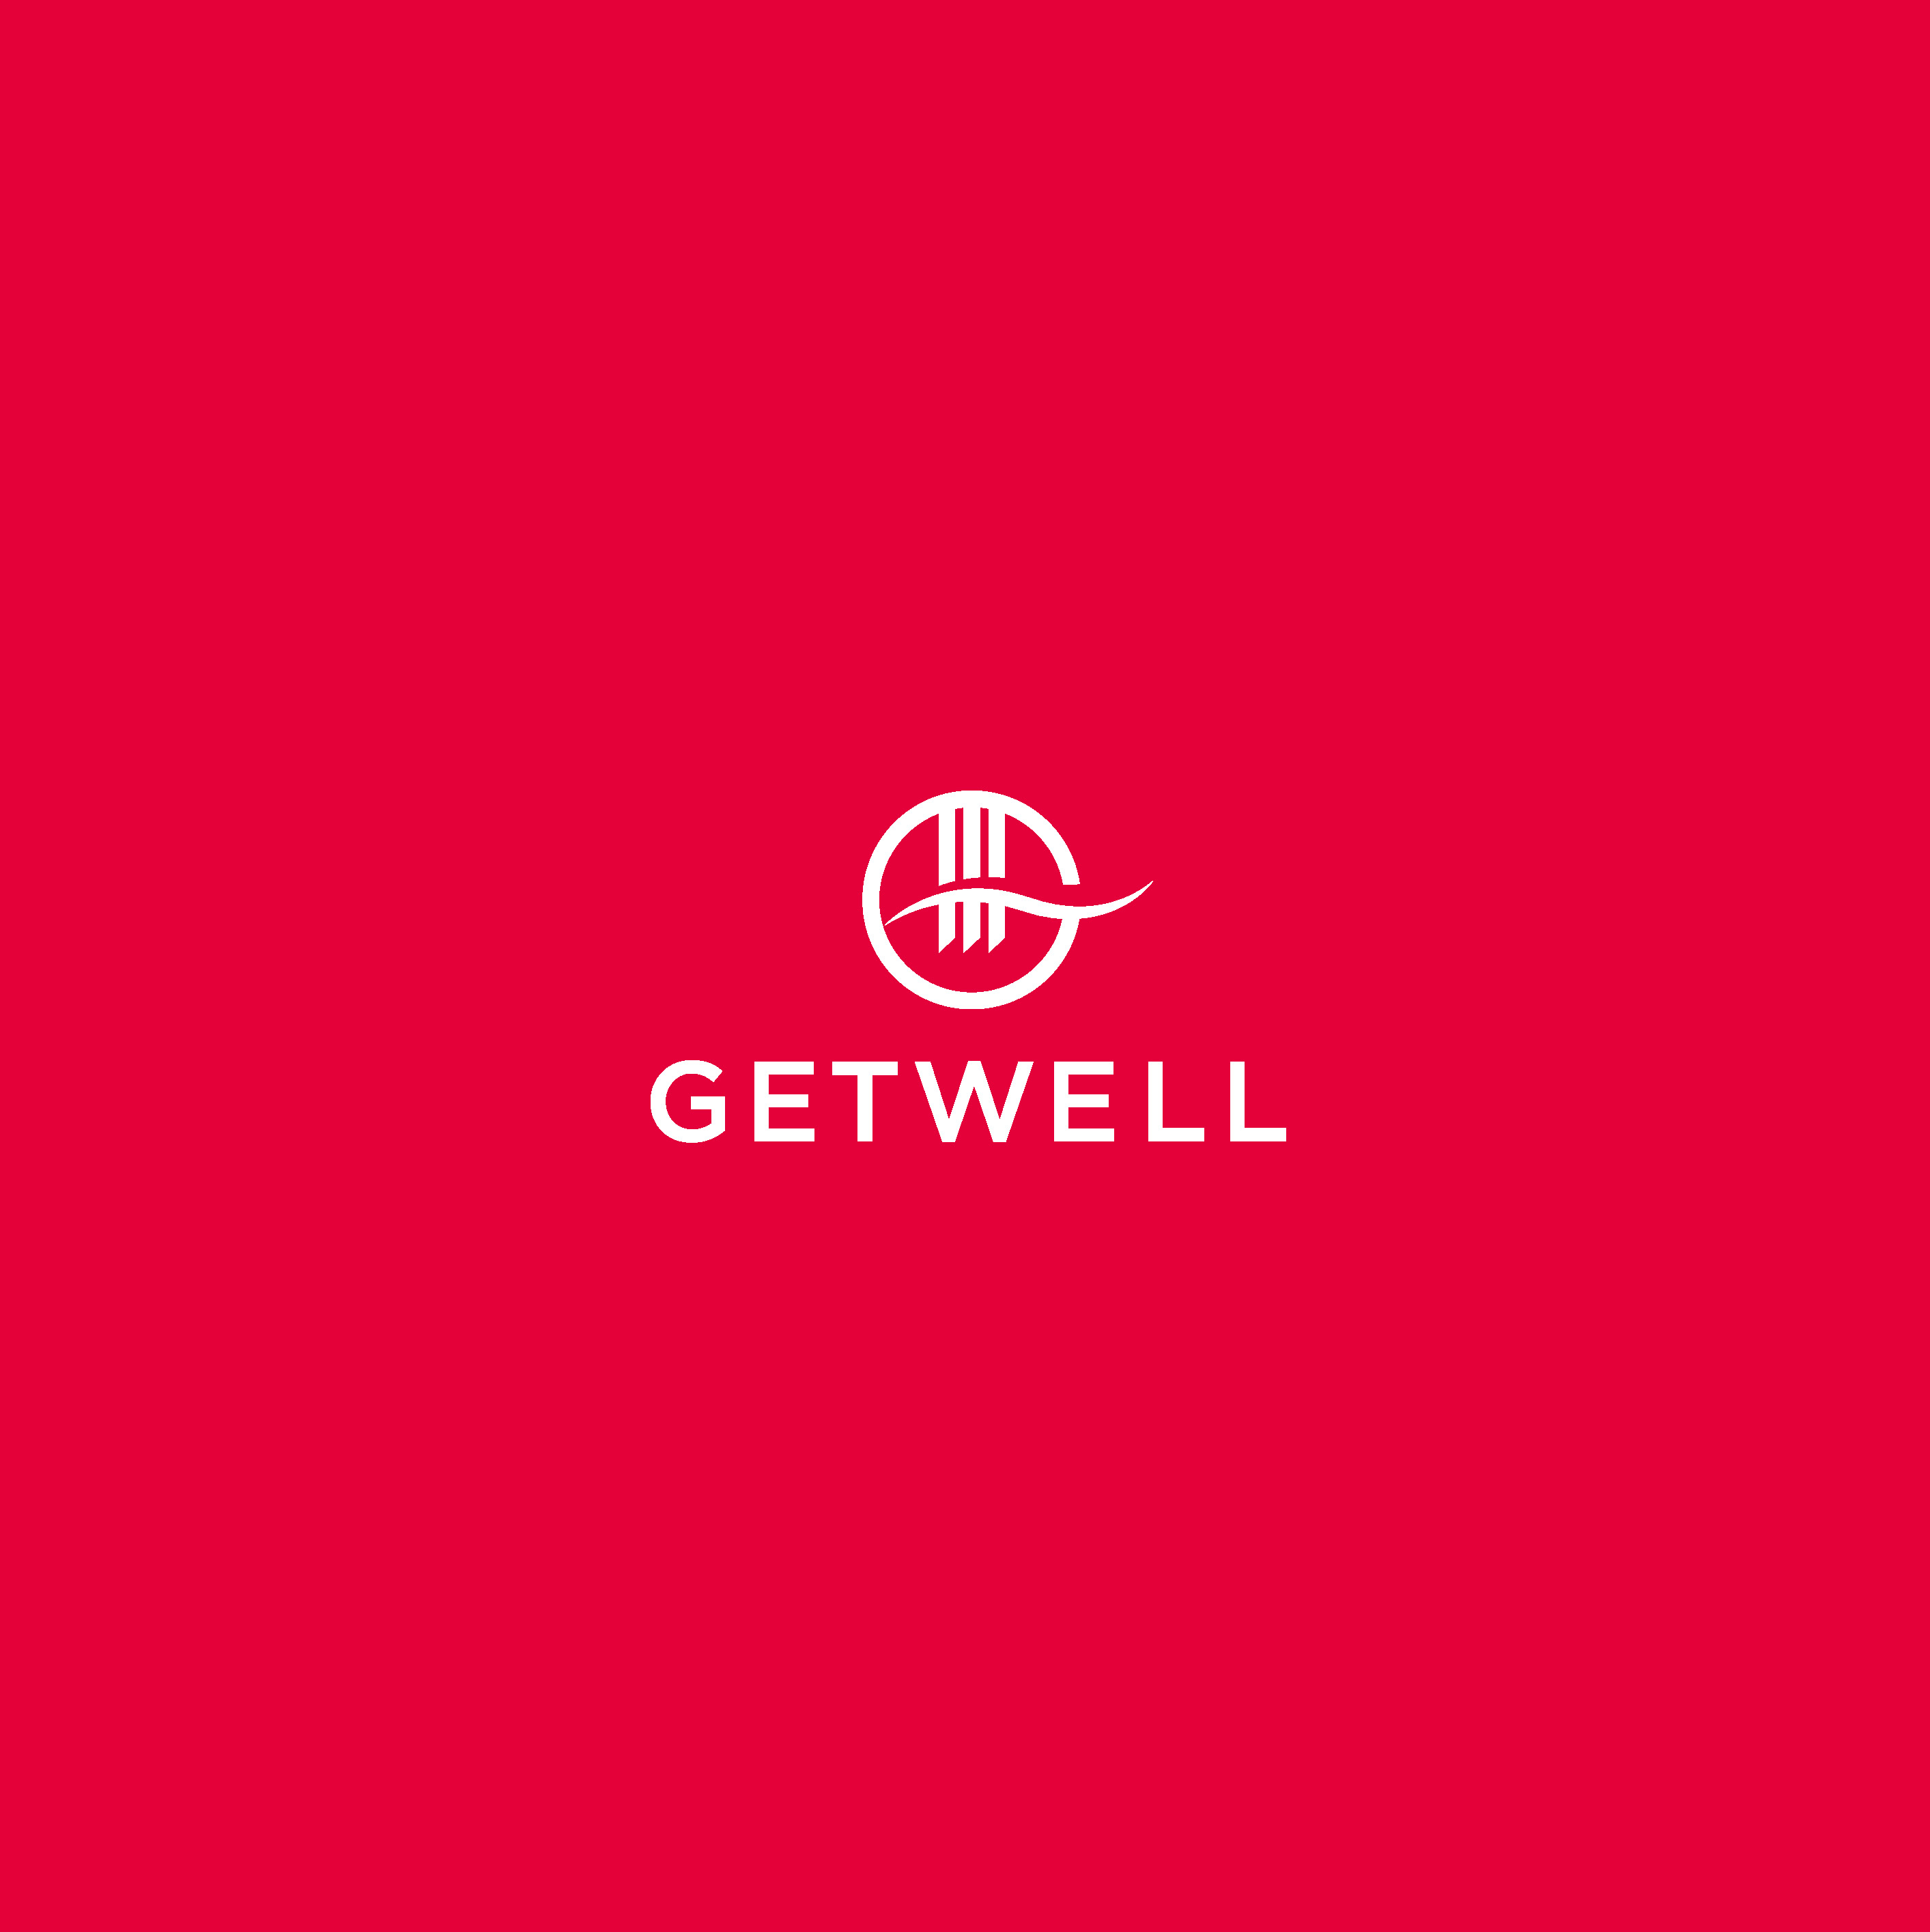 GetWell – emblématerv